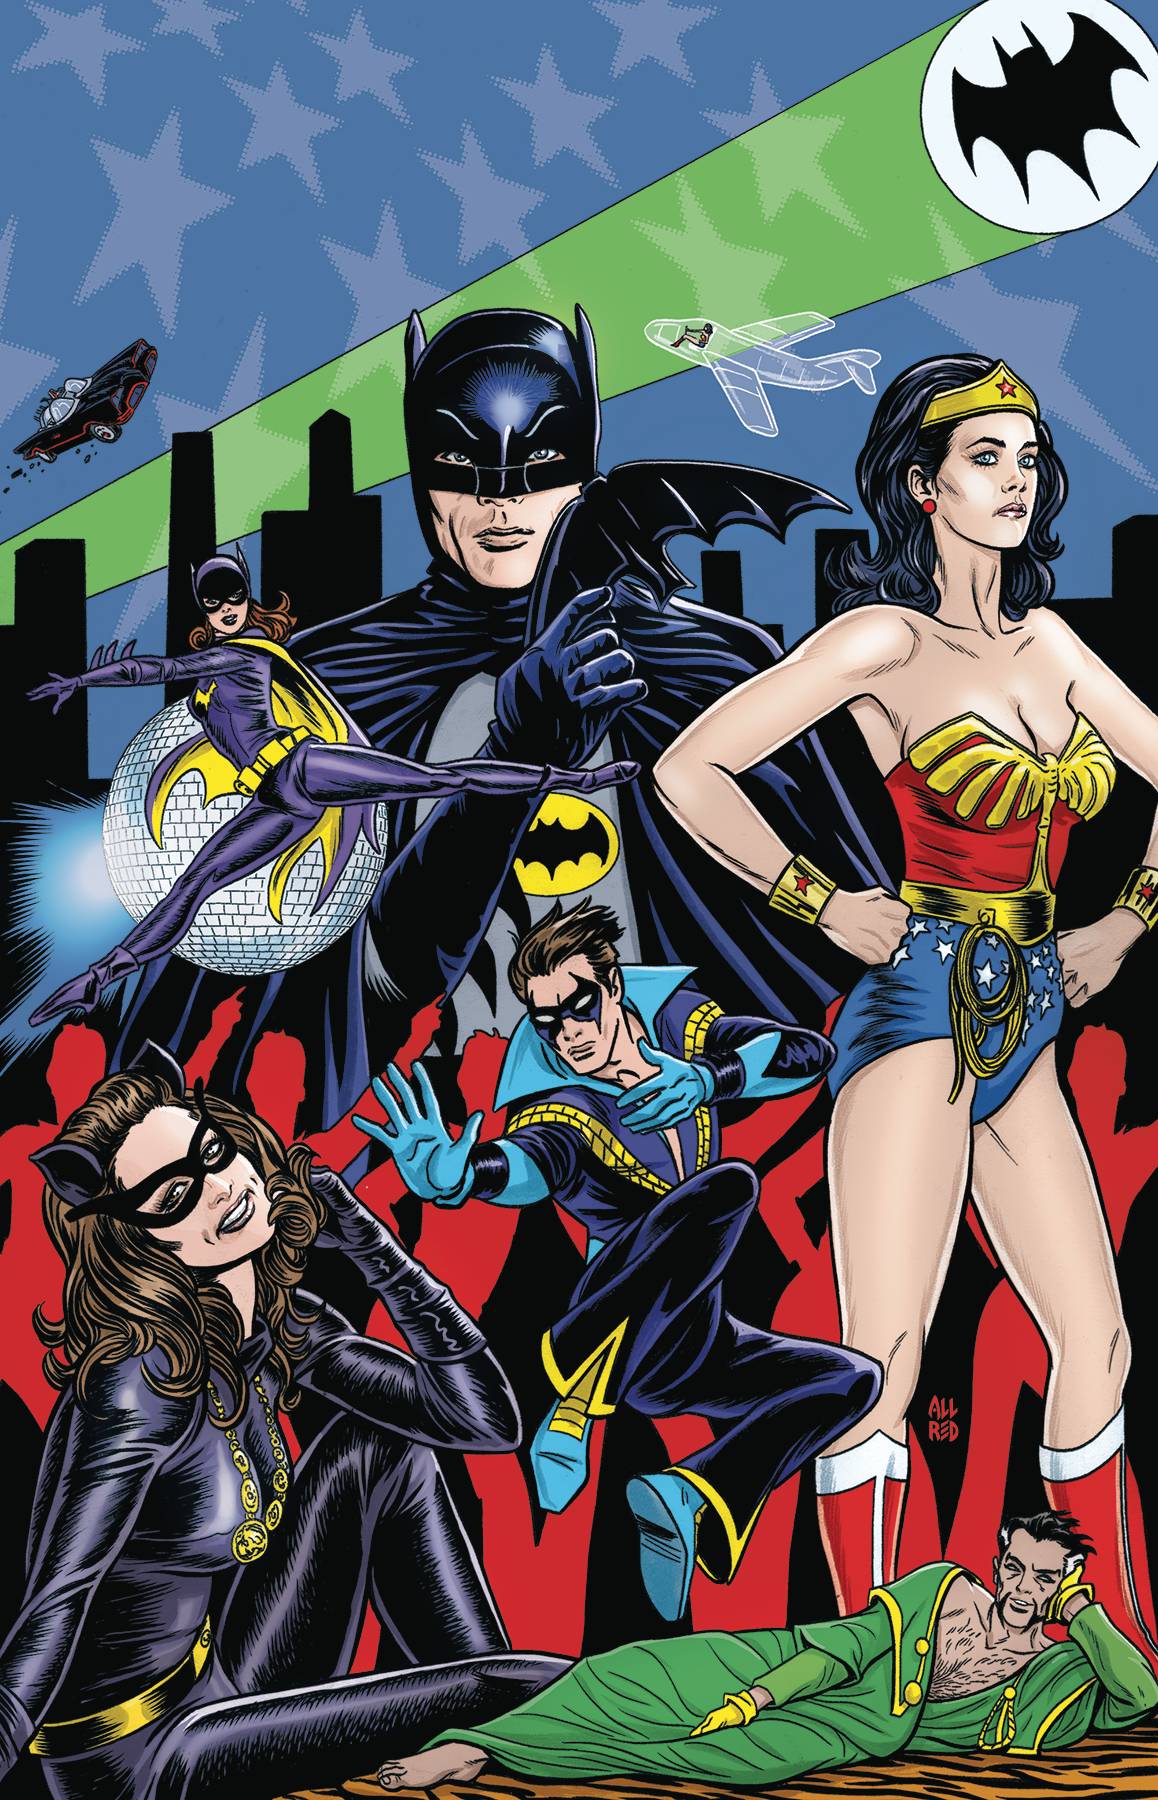 Batman 66 Meets Wonder Woman 77 #6